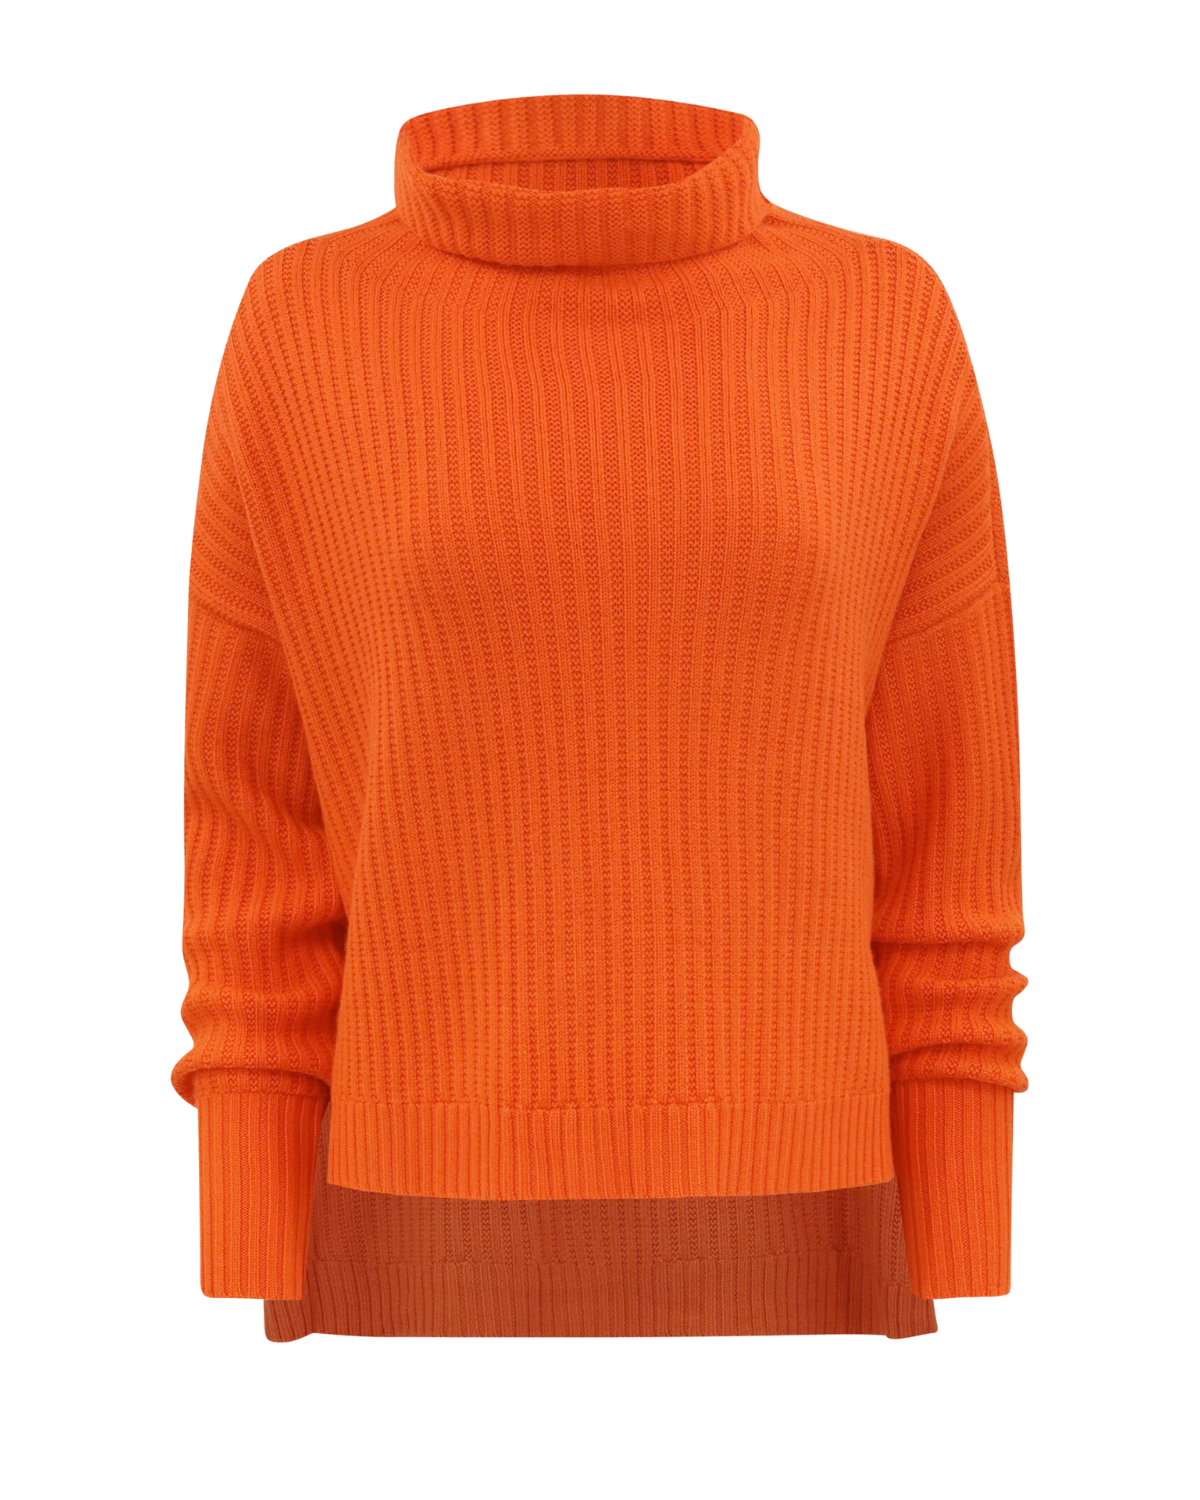 Everly Sweater (Orange)